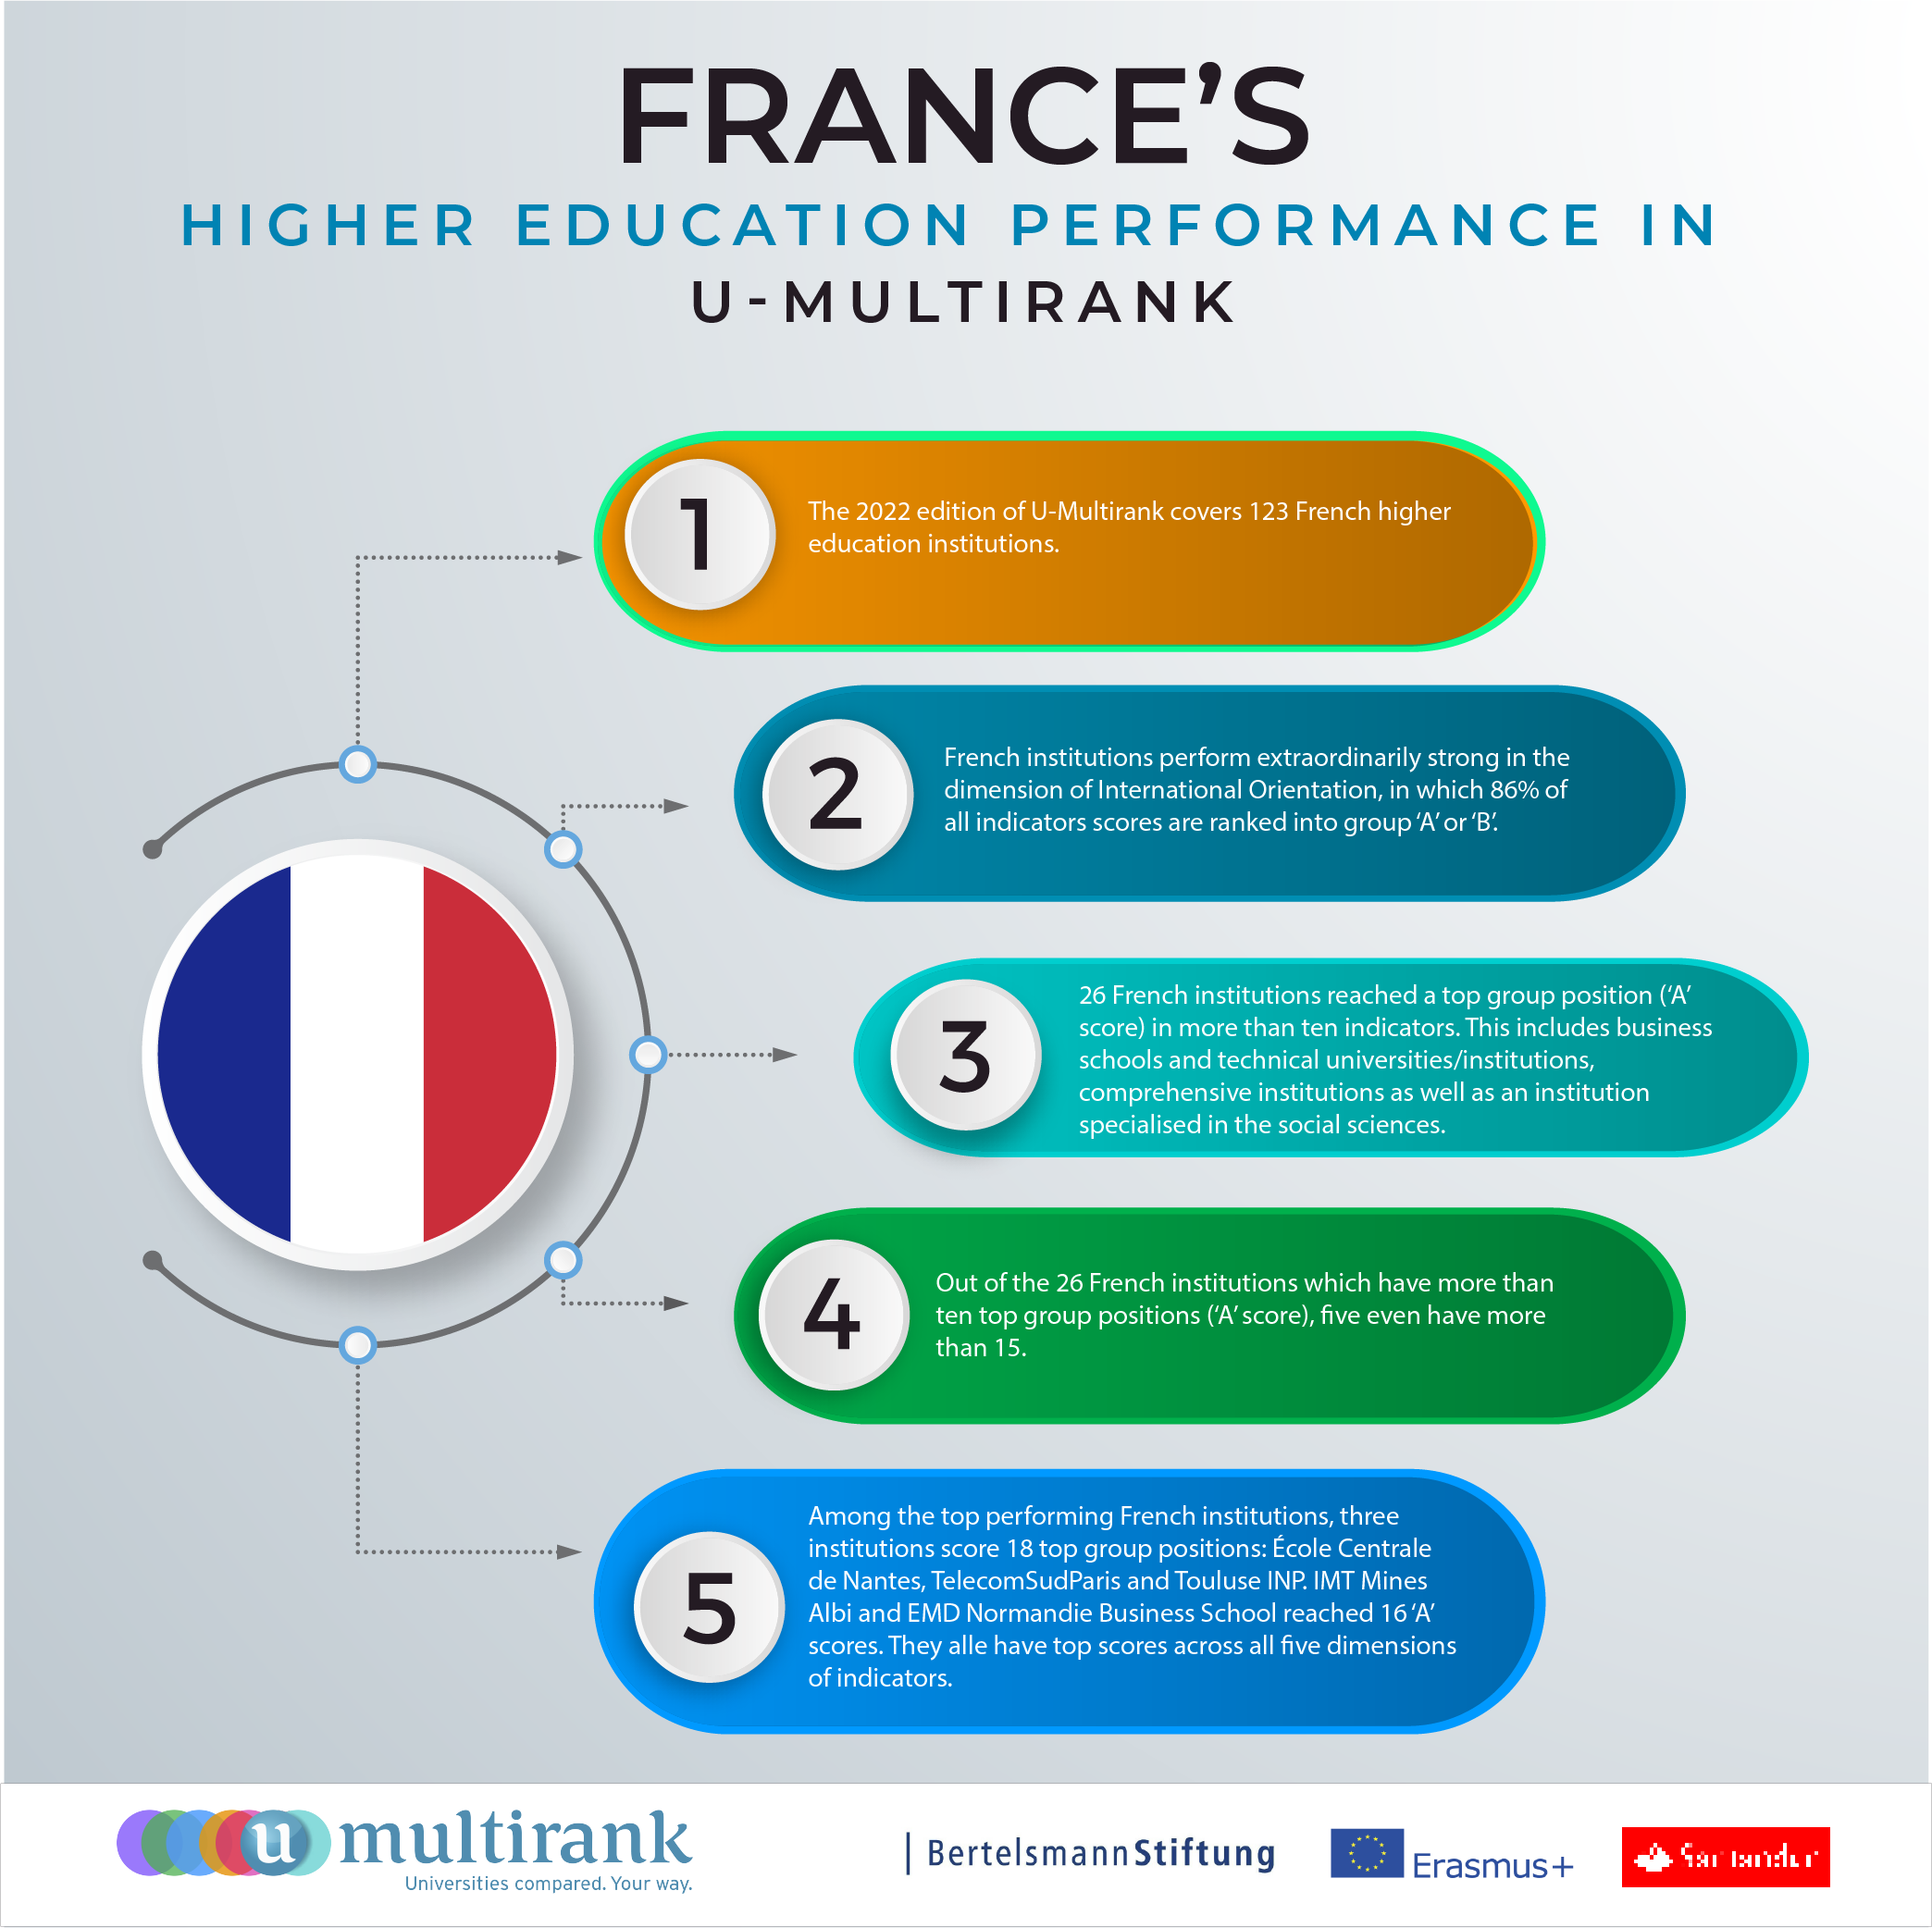 France's Higher Education Performance in U-Multirank